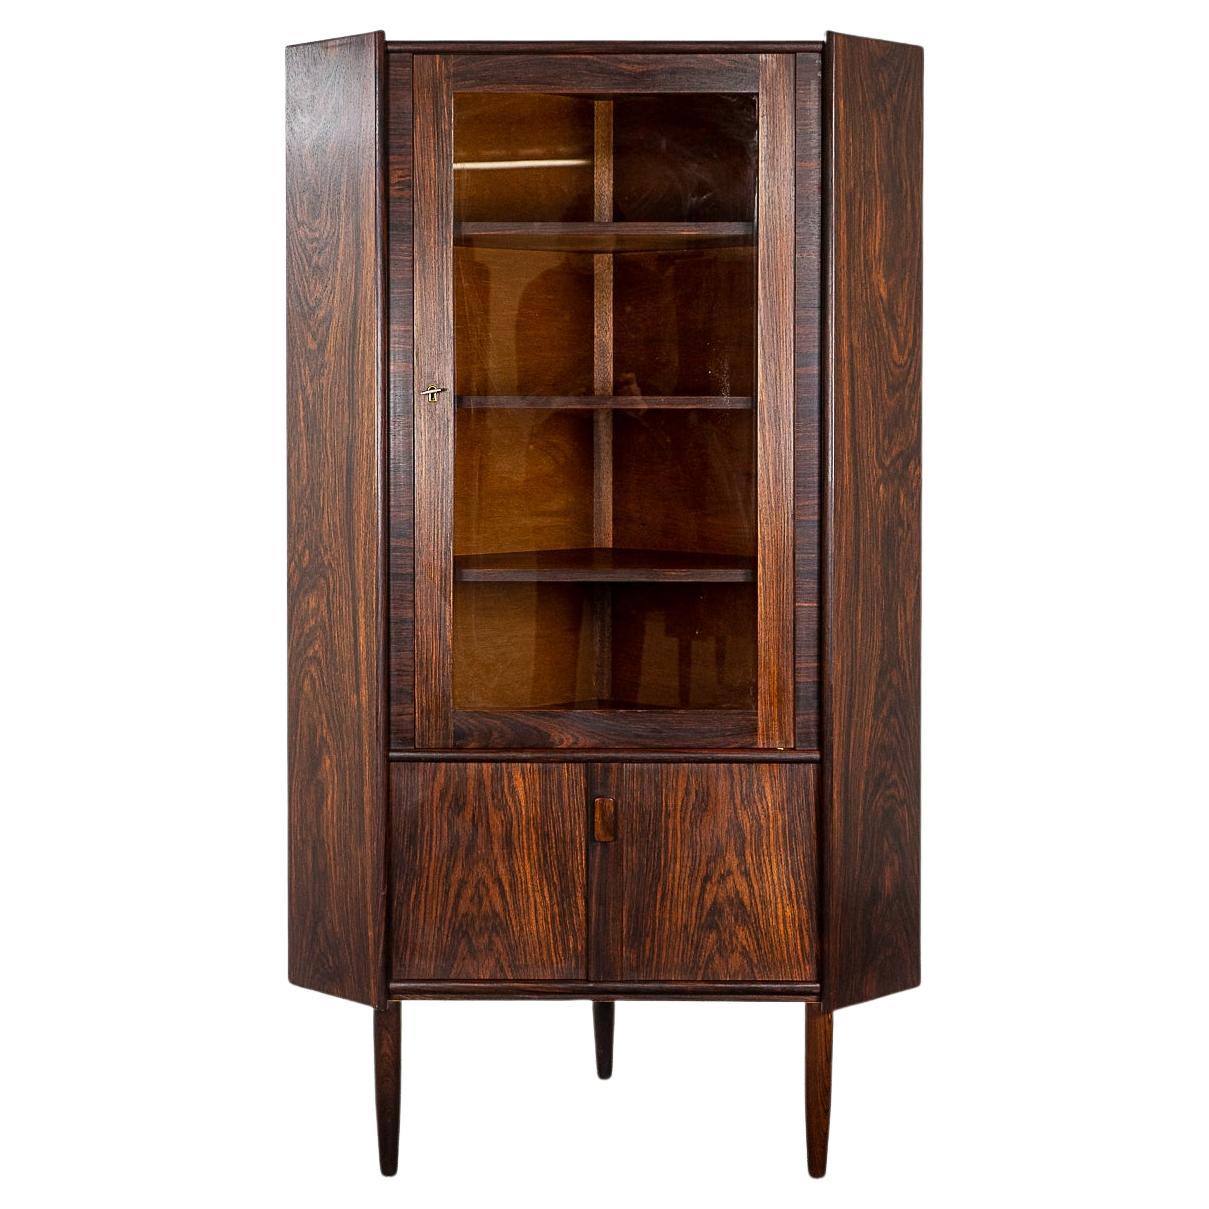 Danish Mid-Century Modern Rosewood & Glass Corner Cabinet